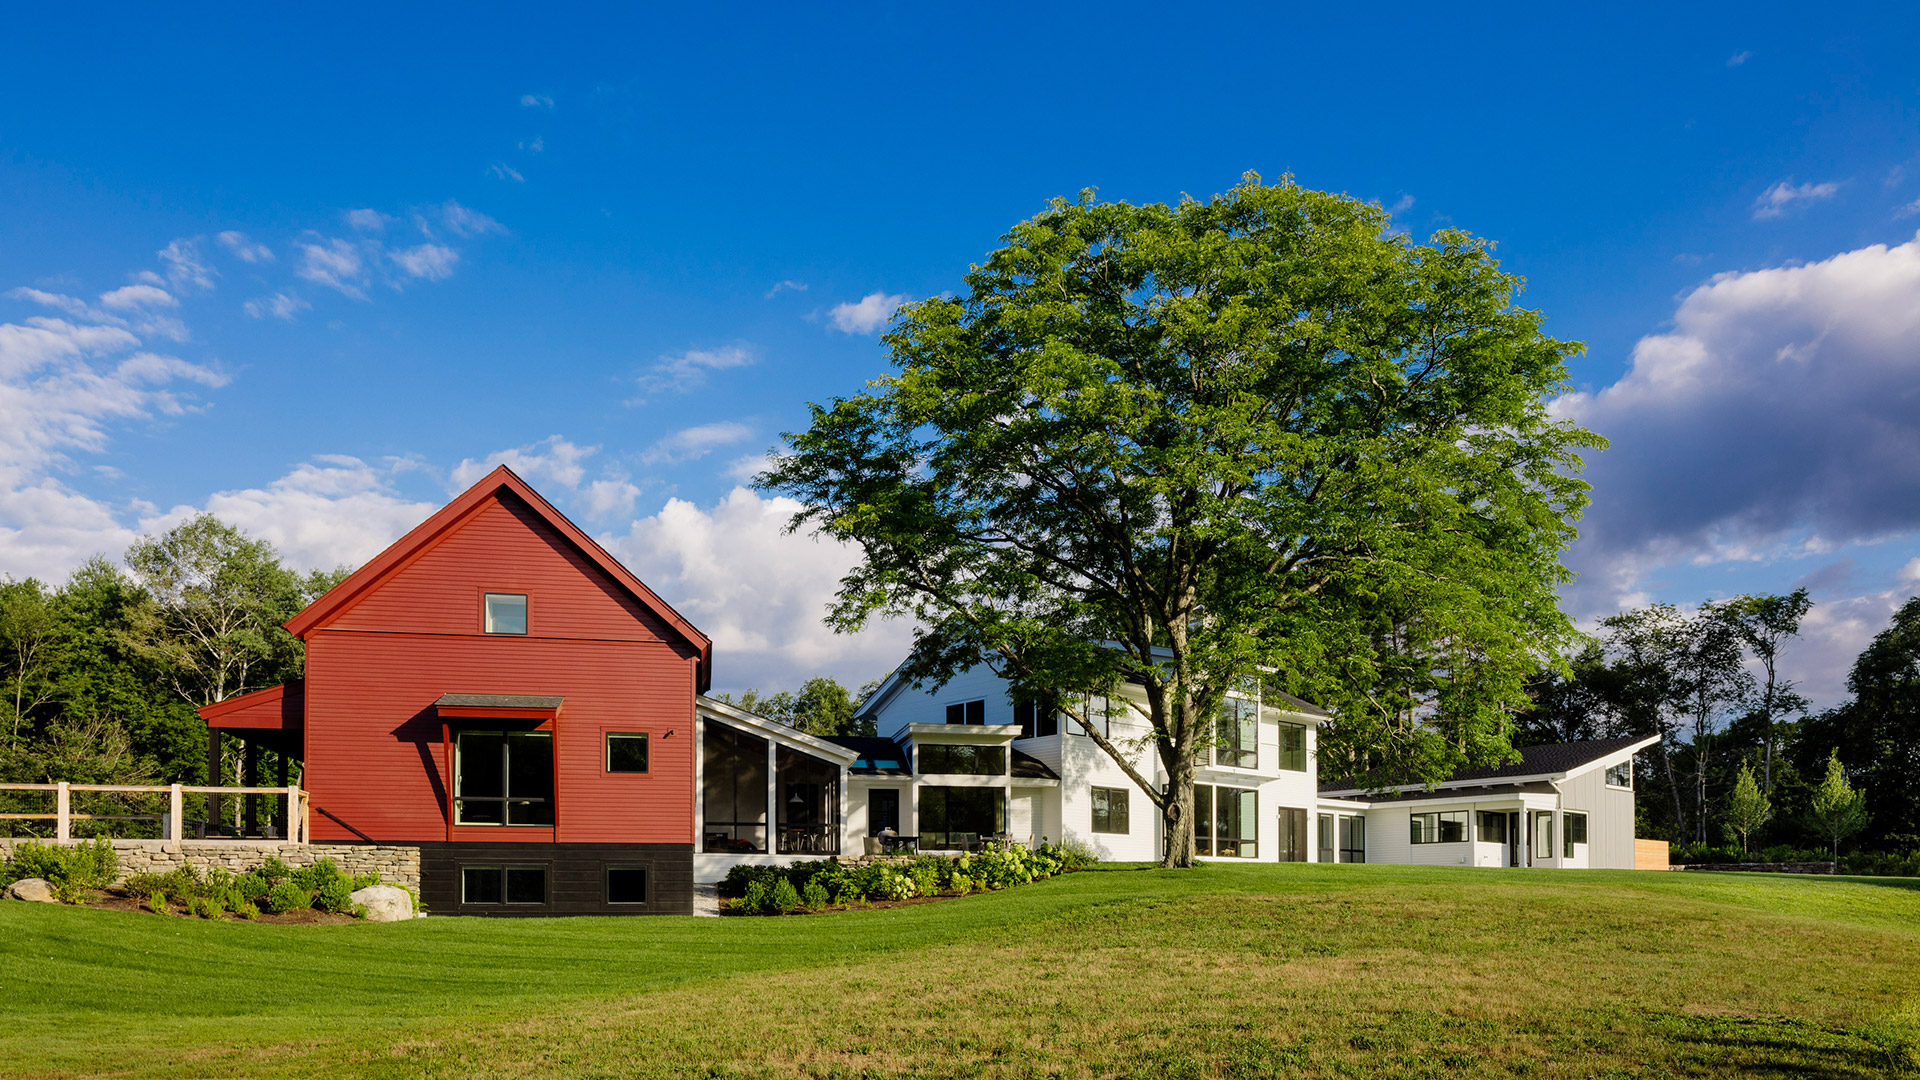 Concord Massachusetts art studio, main house and barn with music studio